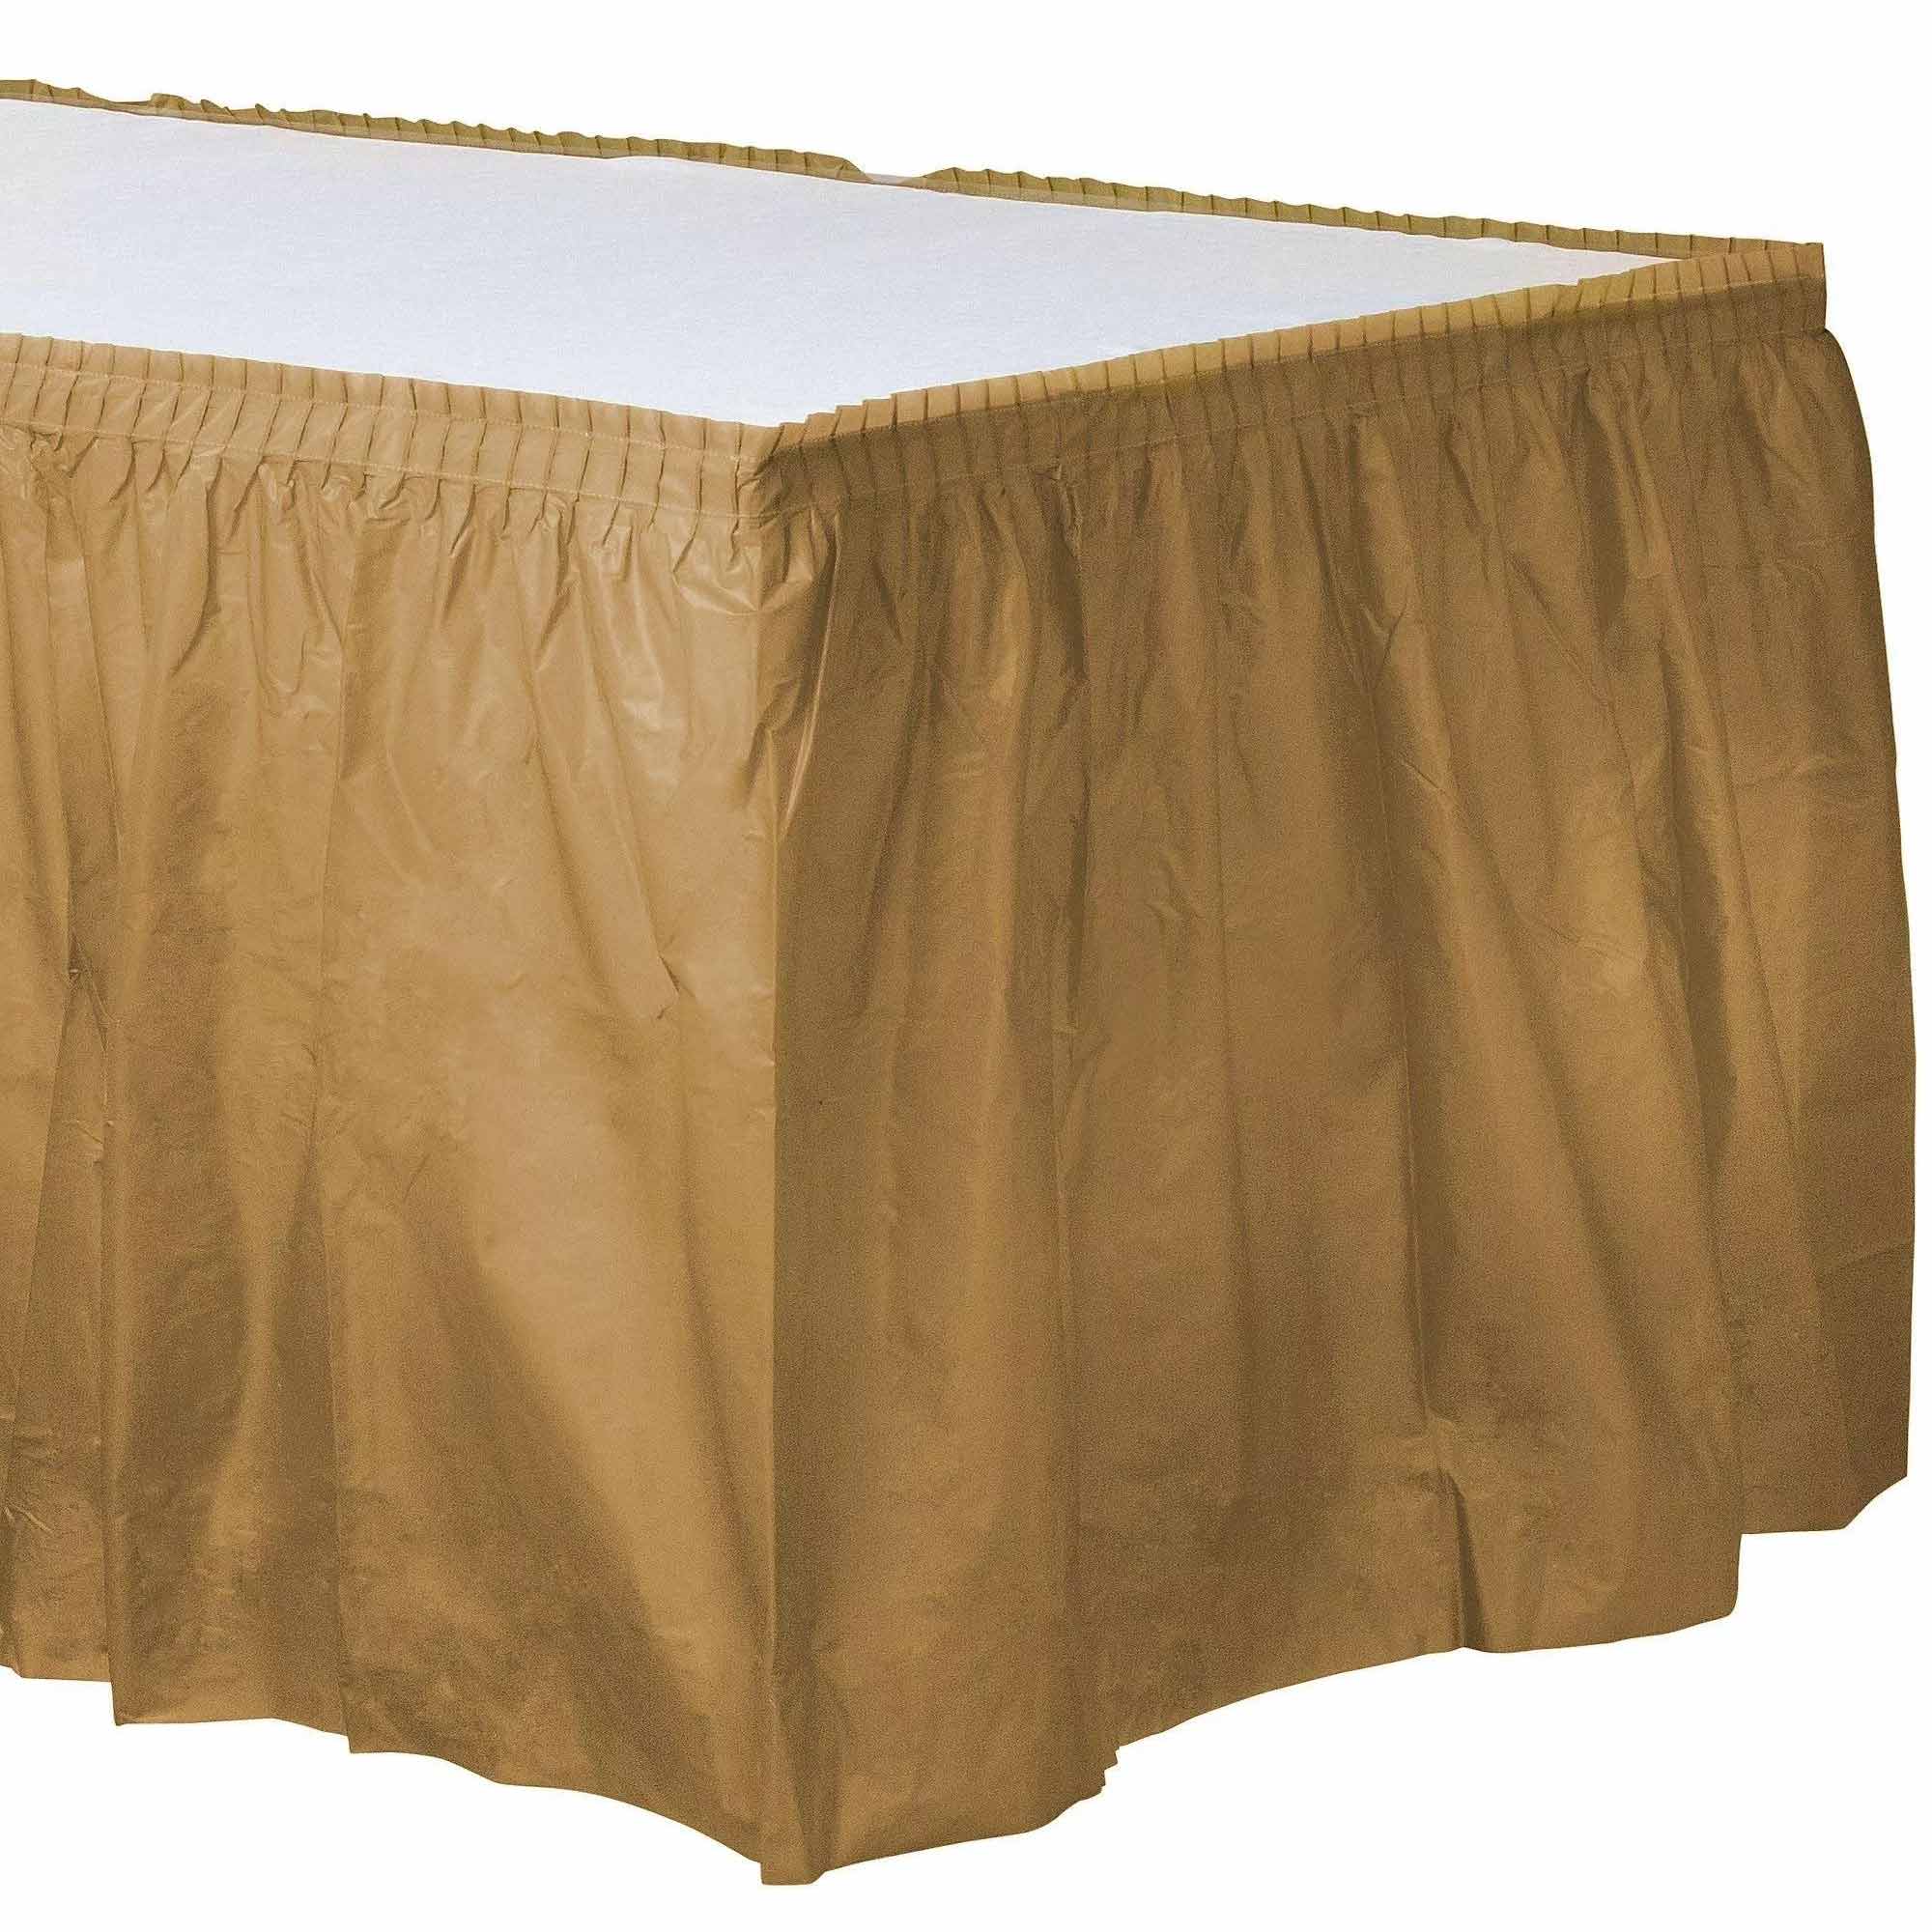 Gold Plastic Table Skirt 21ft x 29in